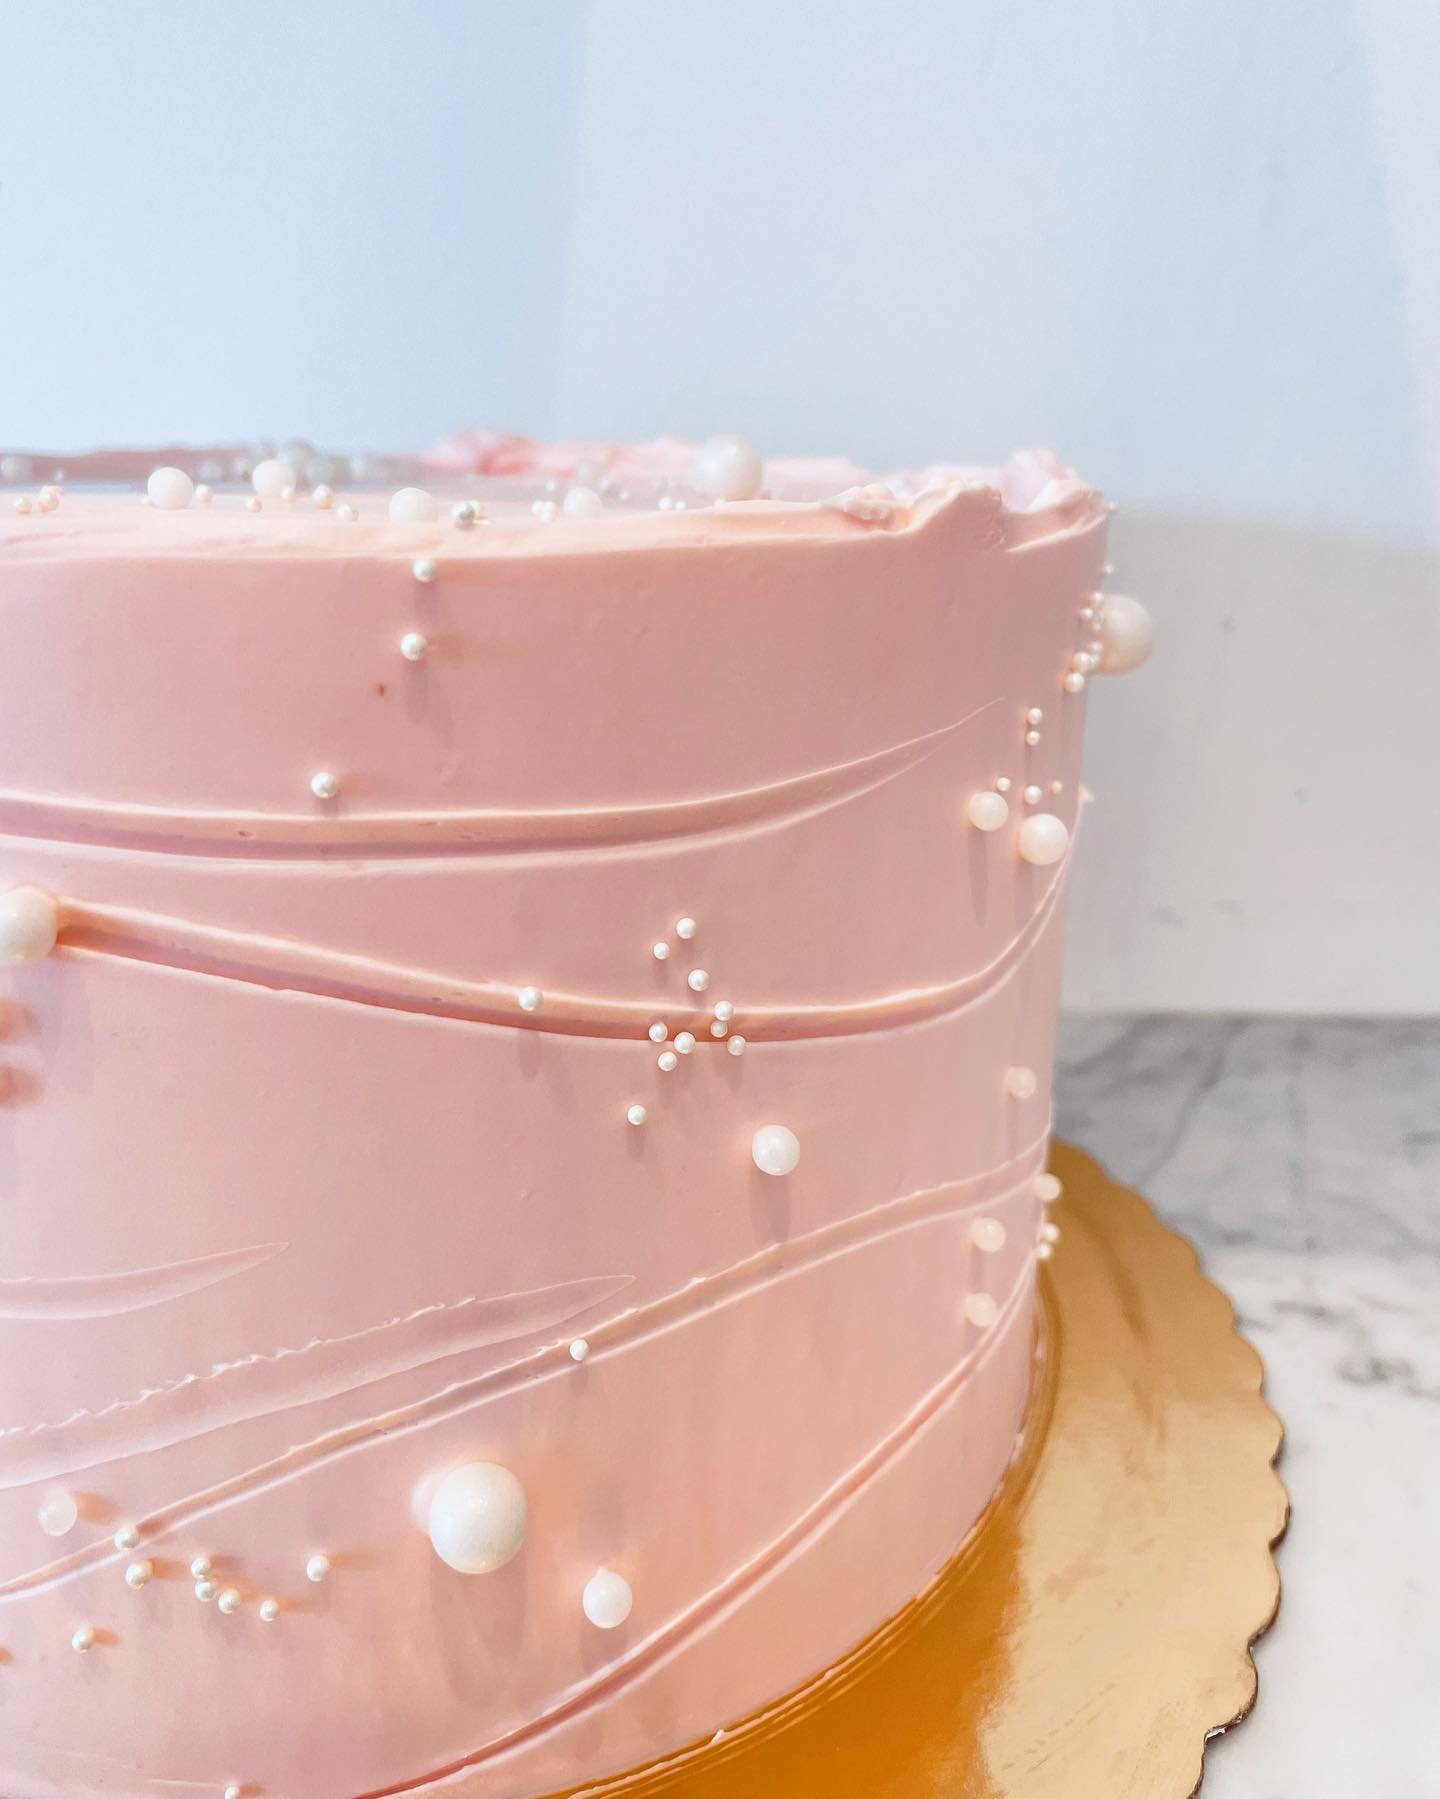 Buttercream + pearl sprinkles💕🫧

#sweetandflour #secaucus #nj #njbakery #jersey #customcakes #cakelife #cupcakes #smallbusiness

#bakery #cake #baking #dessert #pastry #foodporn #instafood #chocolate #foodie #cookies #cakedecorating #birthdaycake #